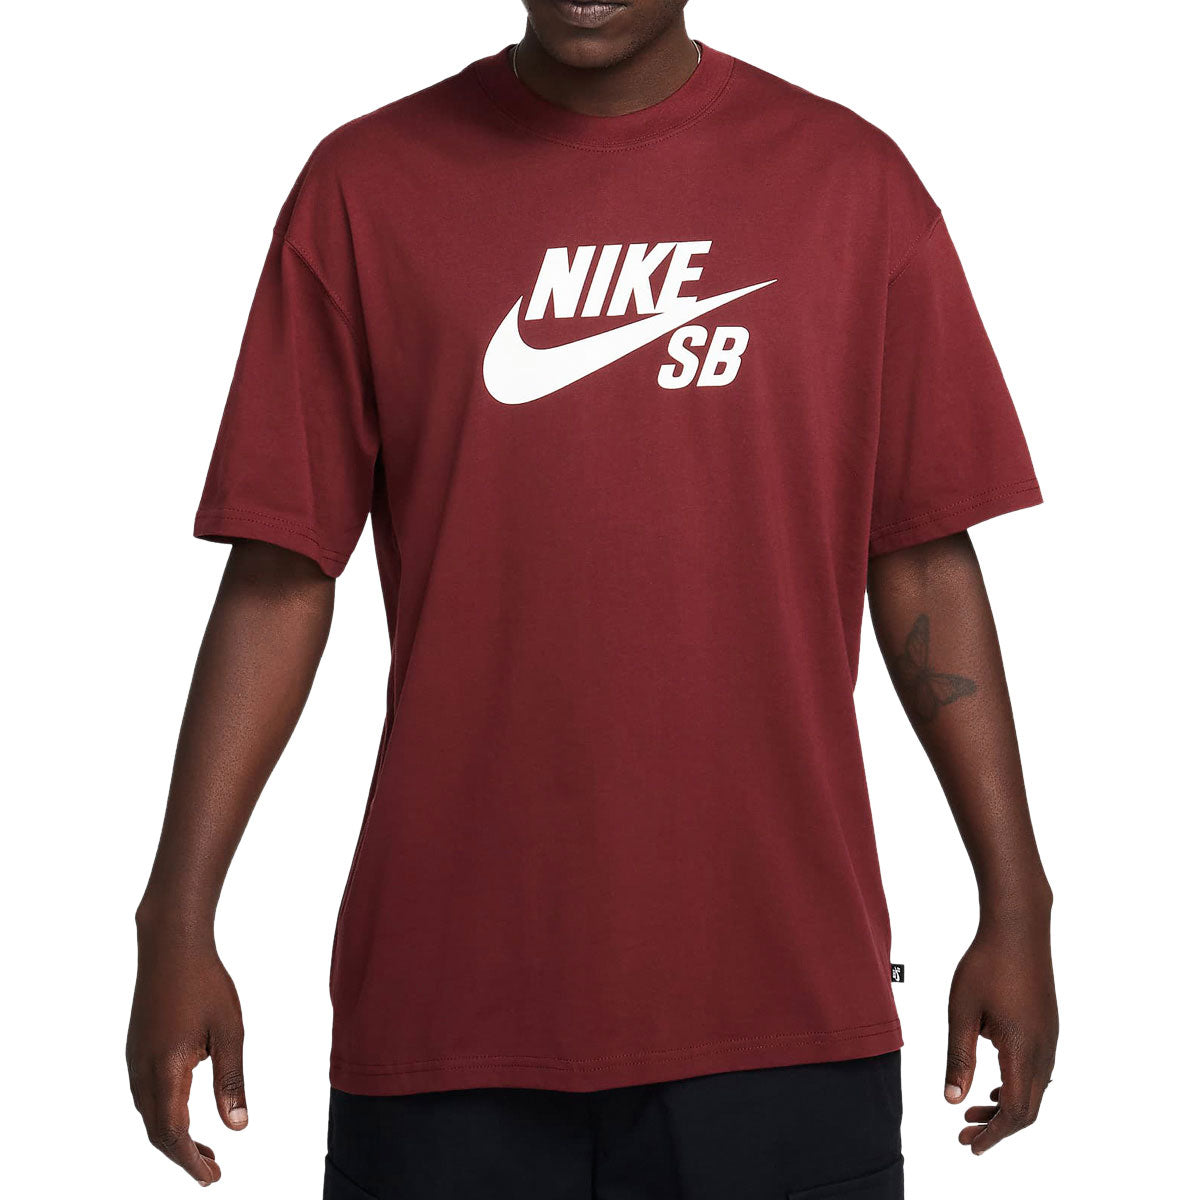 Nike SB Logo T-Shirt - Dark Team Red image 2